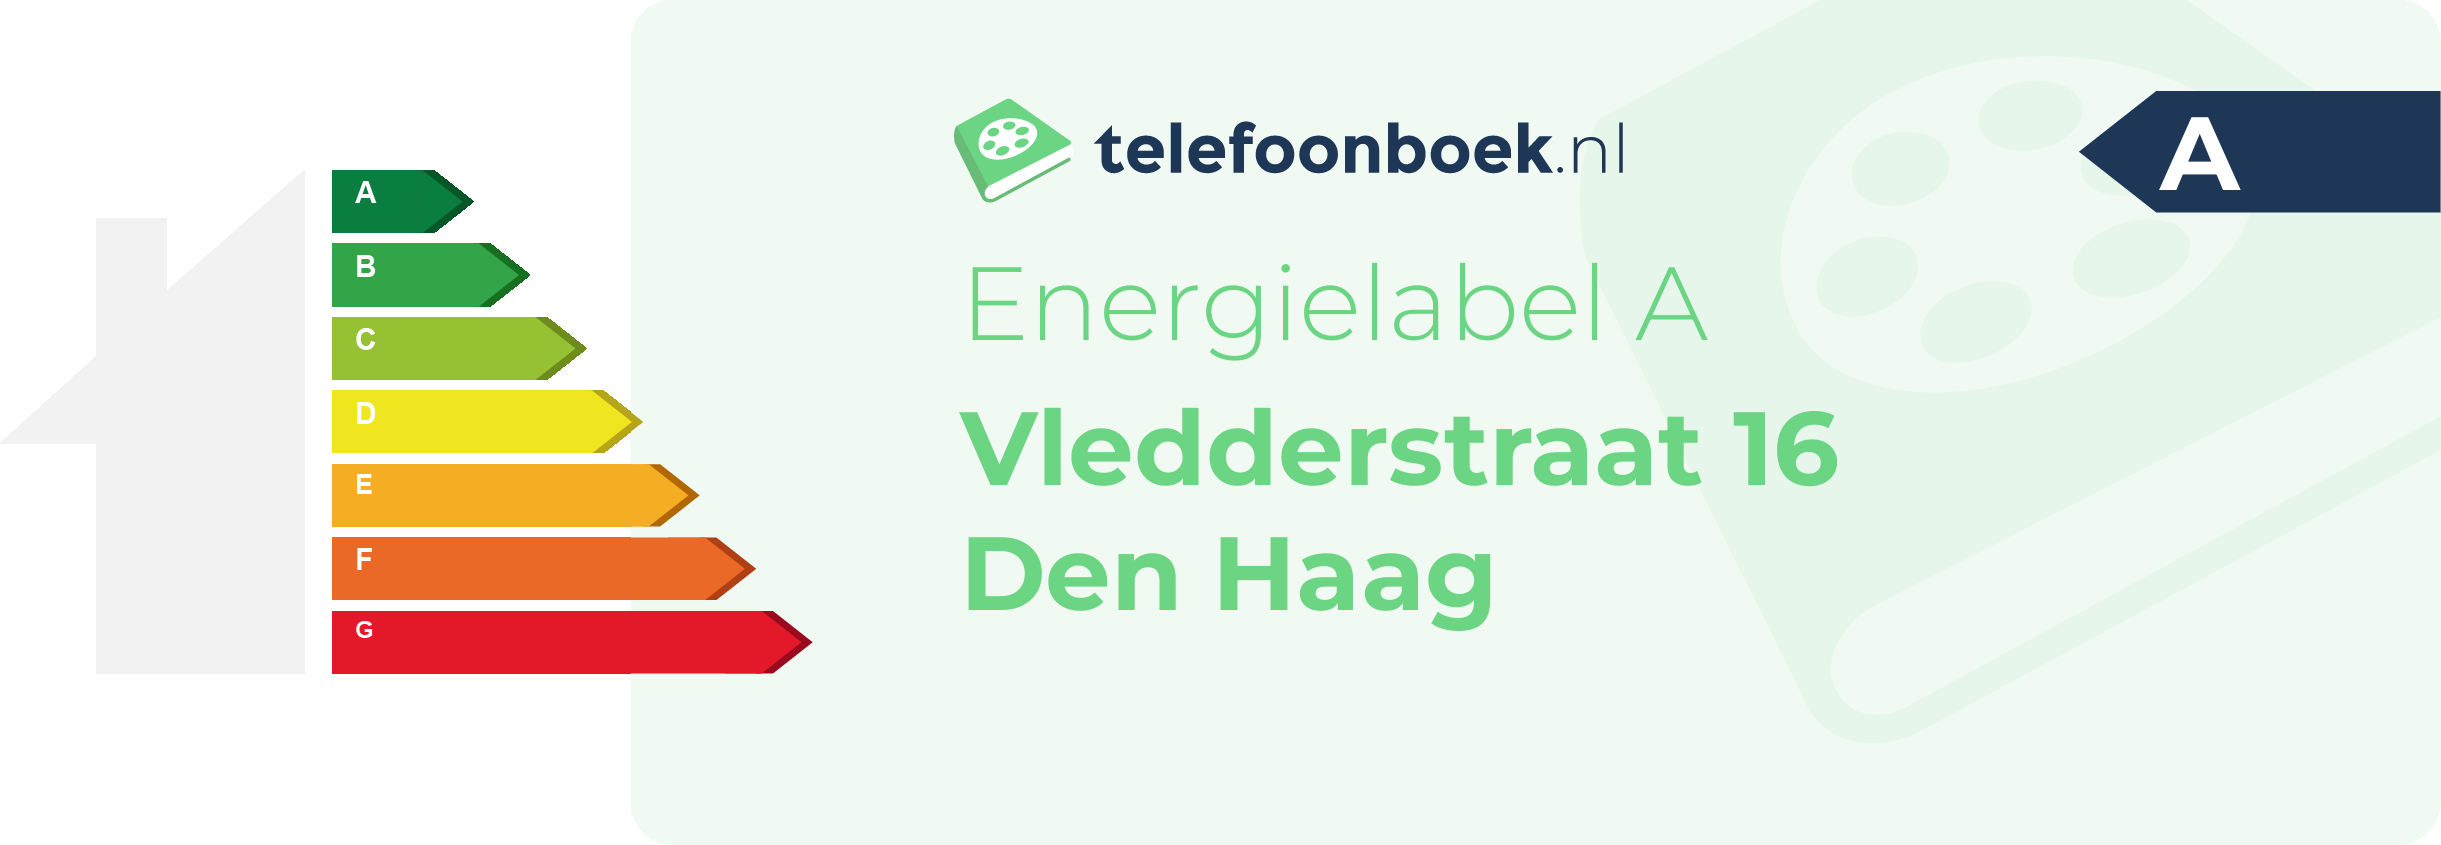 Energielabel Vledderstraat 16 Den Haag